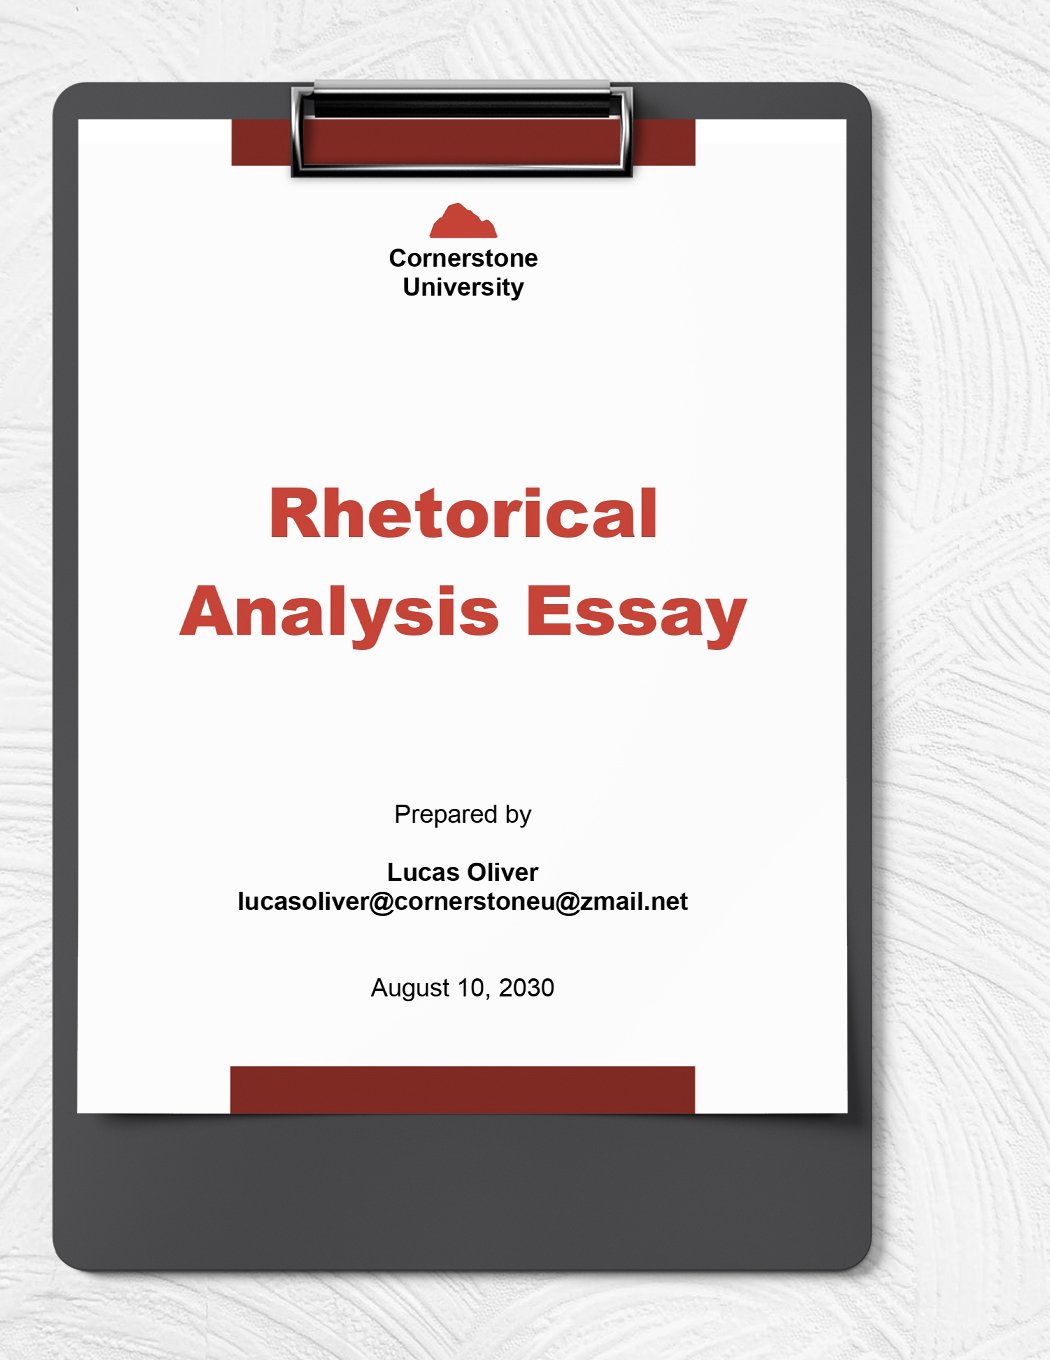 Rhetorical Analysis Essay Template in Word, Google Docs